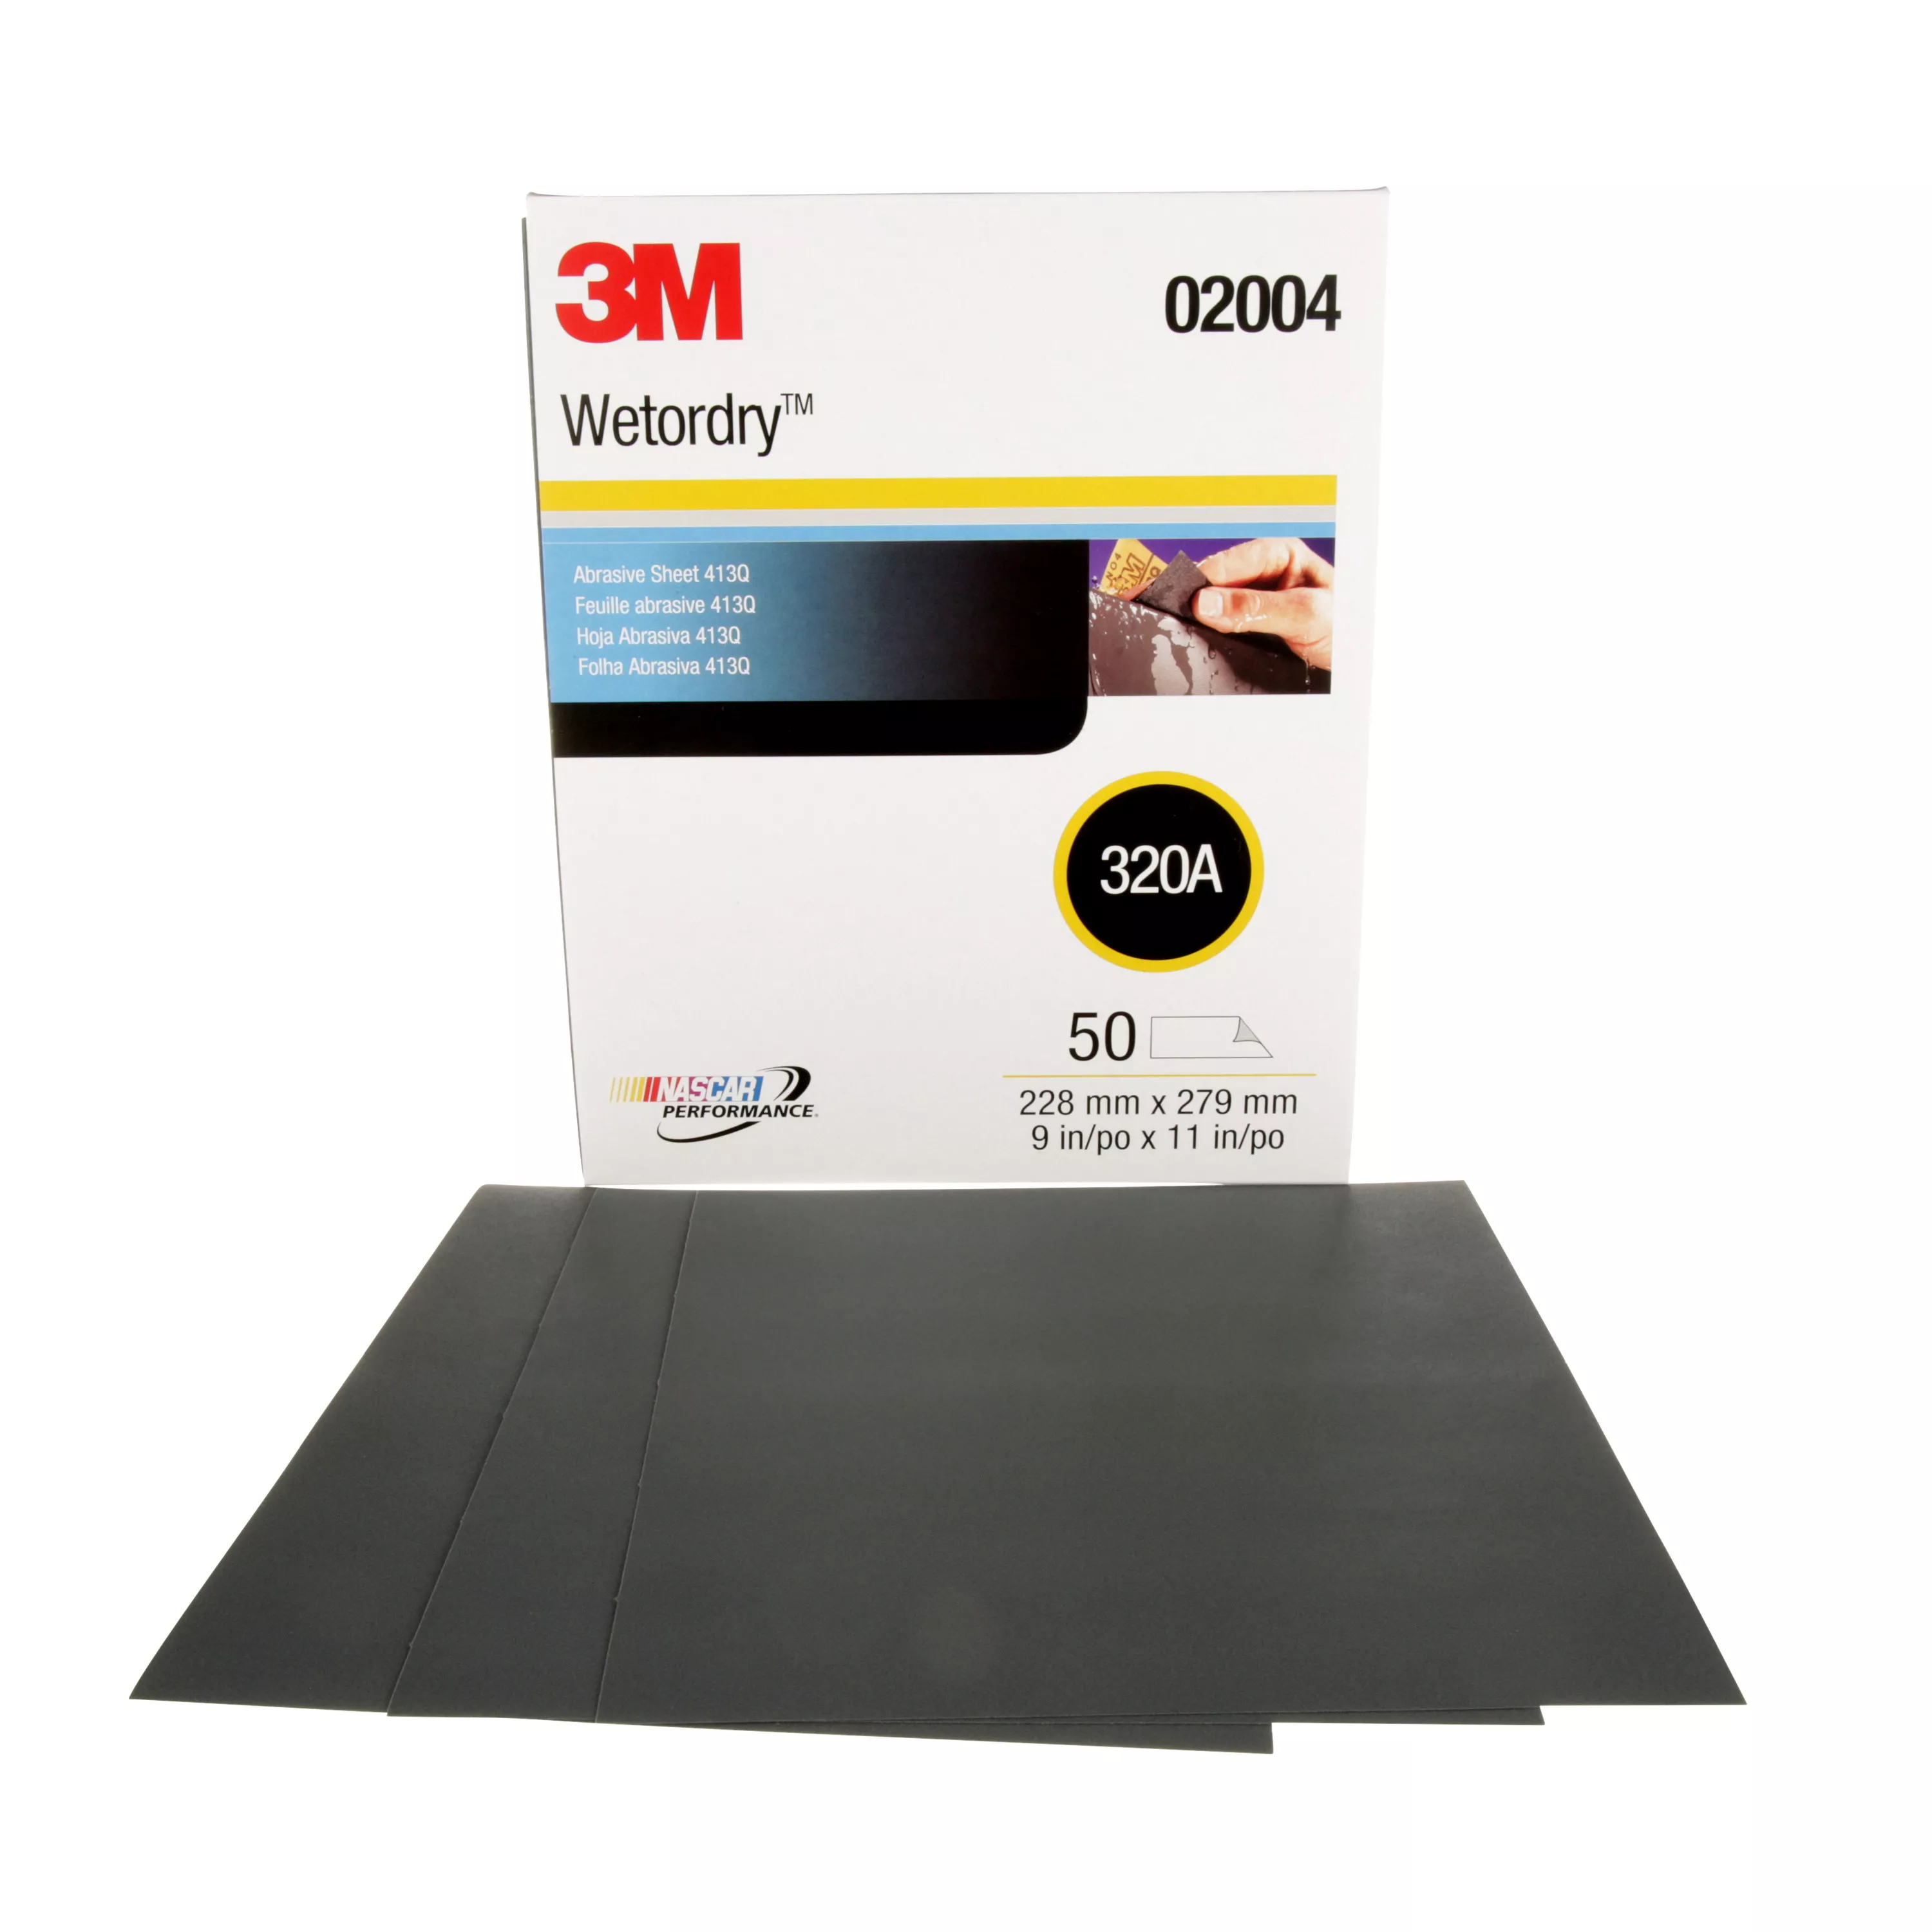 3M™ Wetordry™ Abrasive Sheet 413Q, 02004, 320, 9 in x 11 in, 50 sheets
per carton, 5 cartons per case